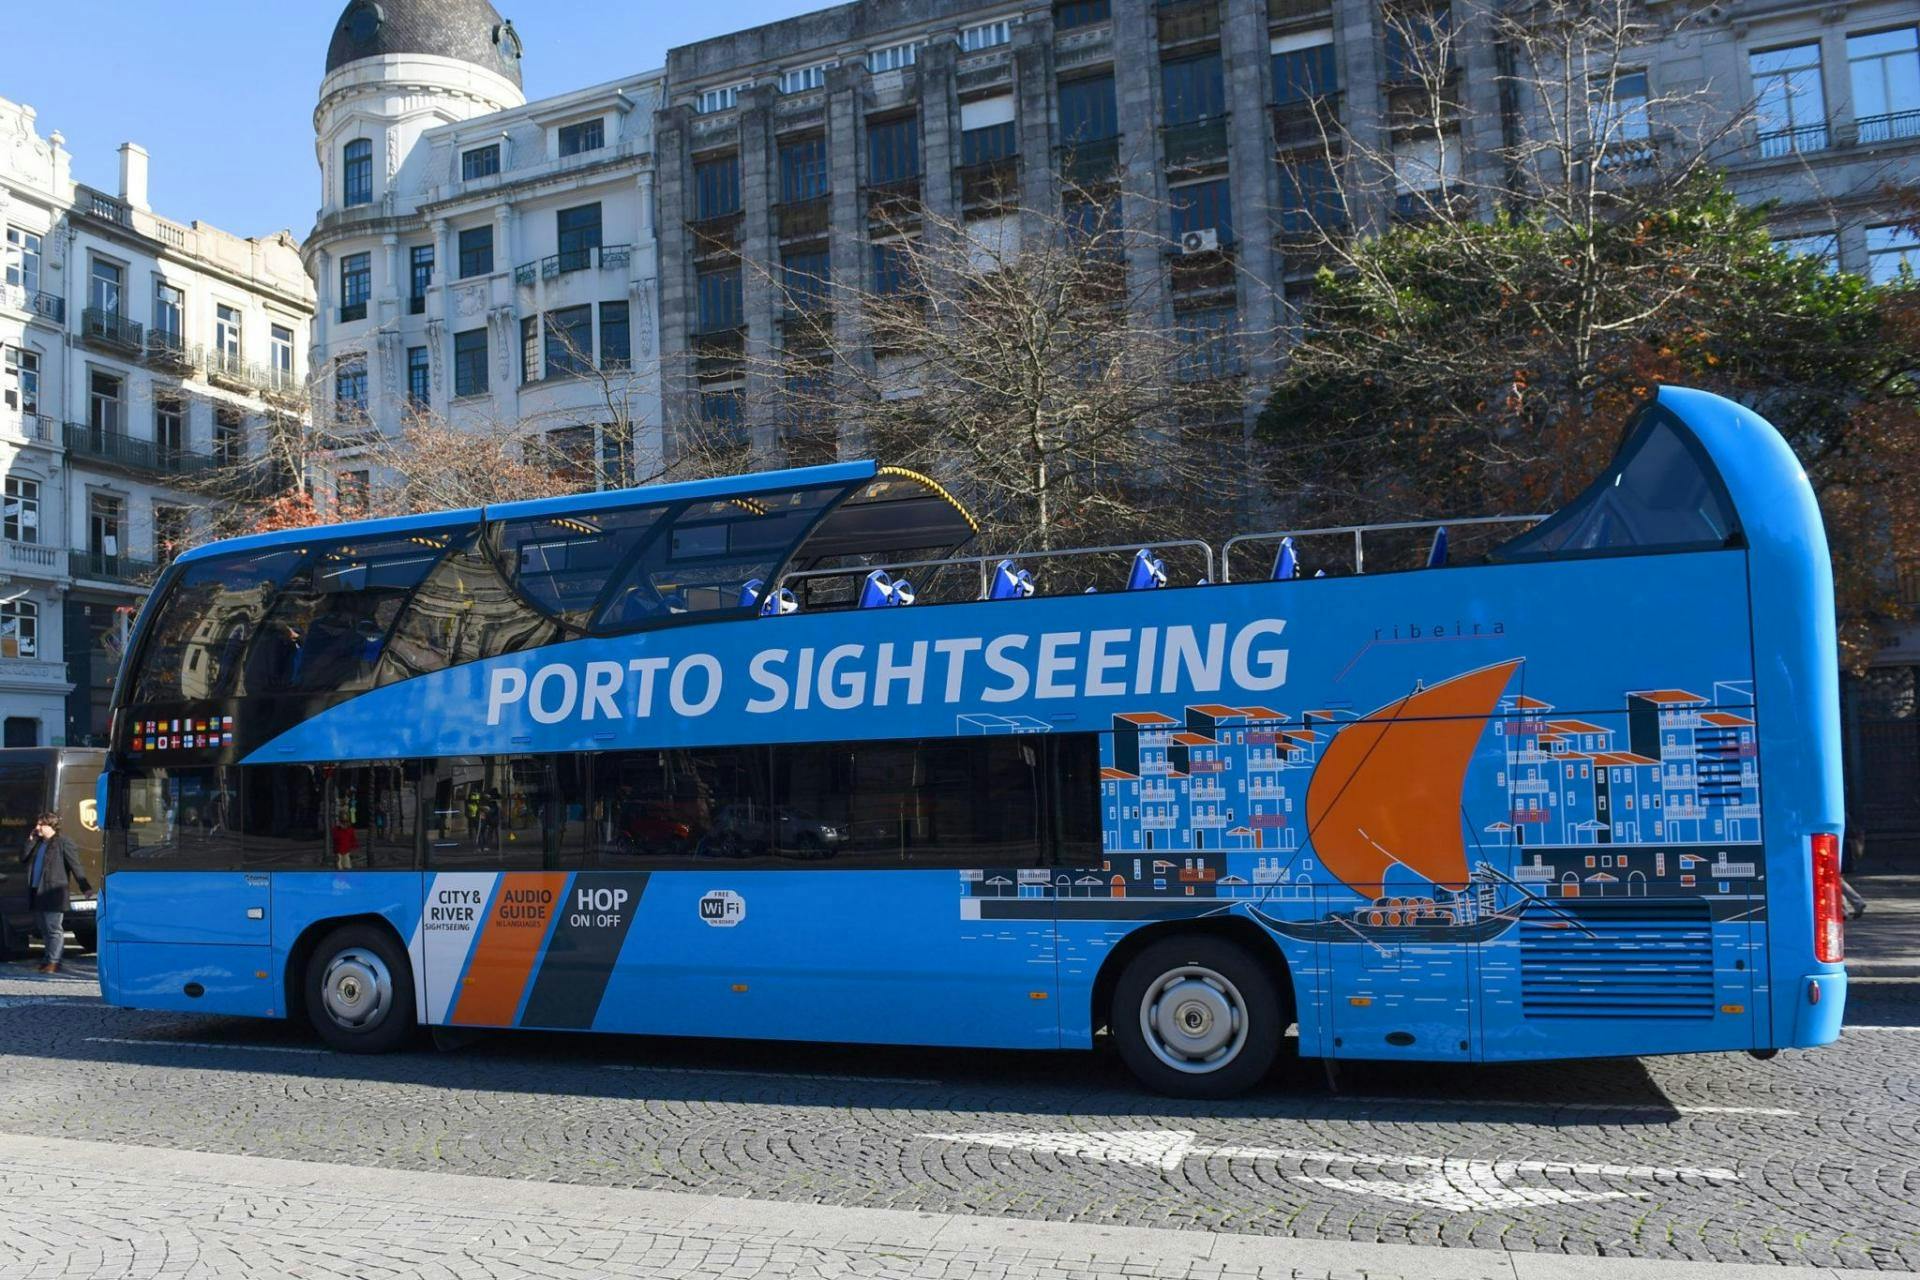 Recorrido de 48 horas en autobús turístico por Oporto con visita a bodegas